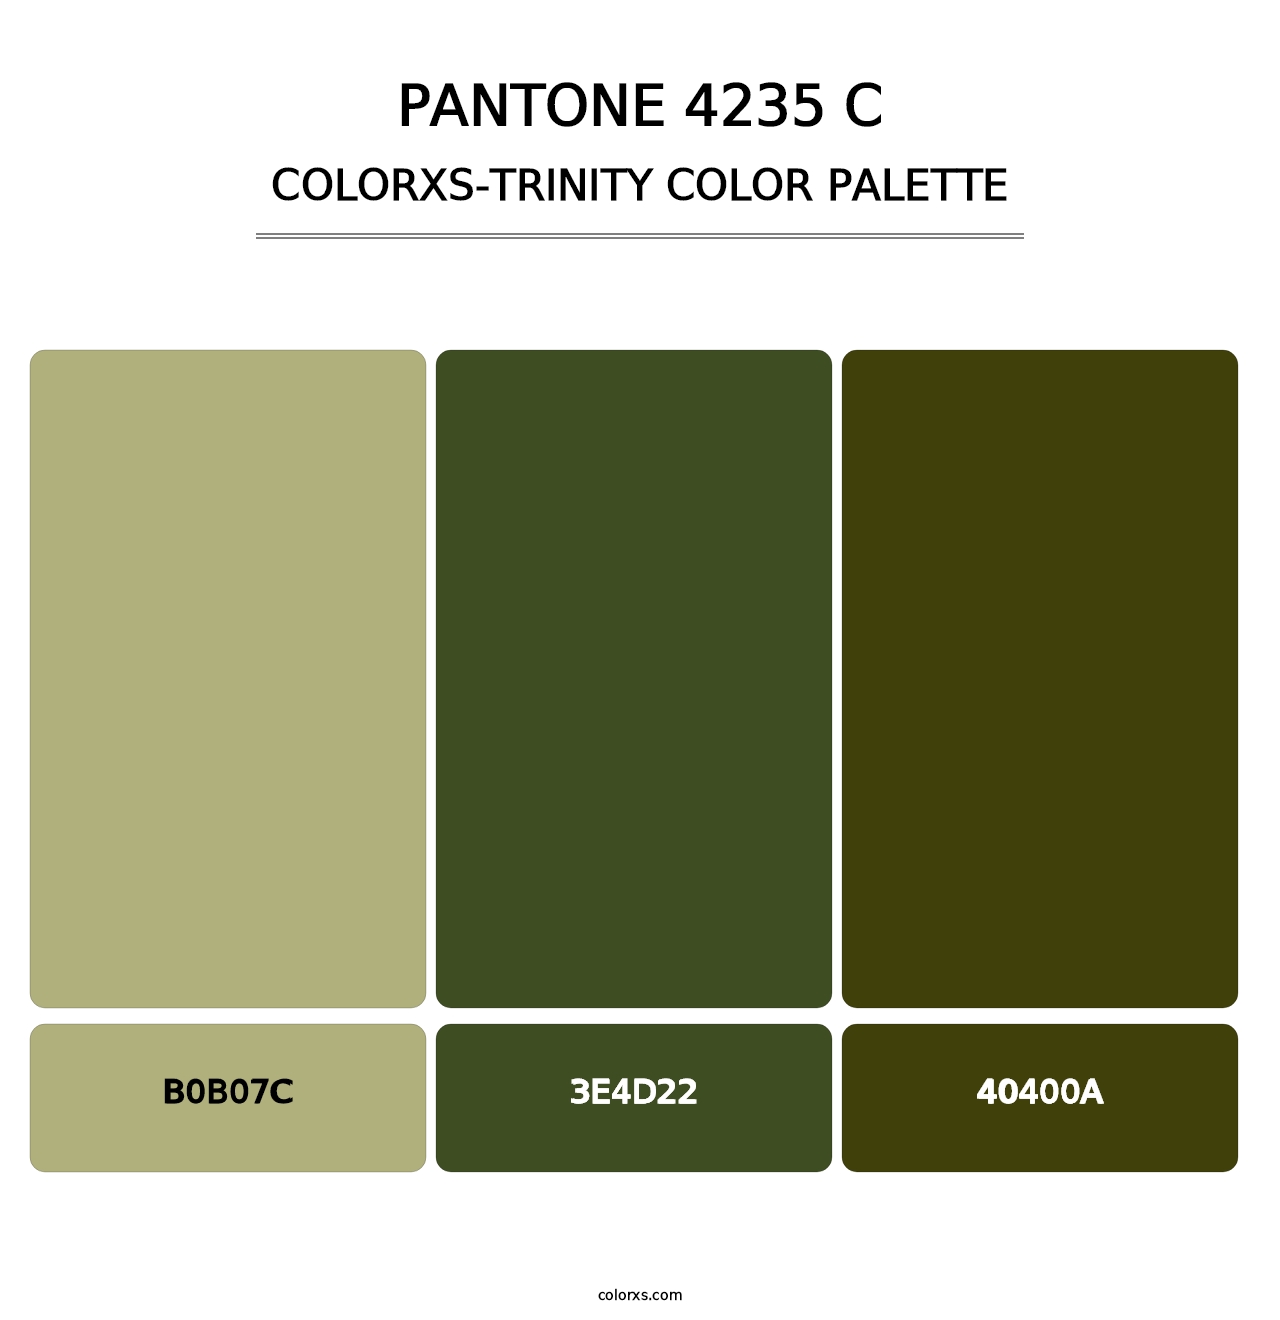 PANTONE 4235 C - Colorxs Trinity Palette